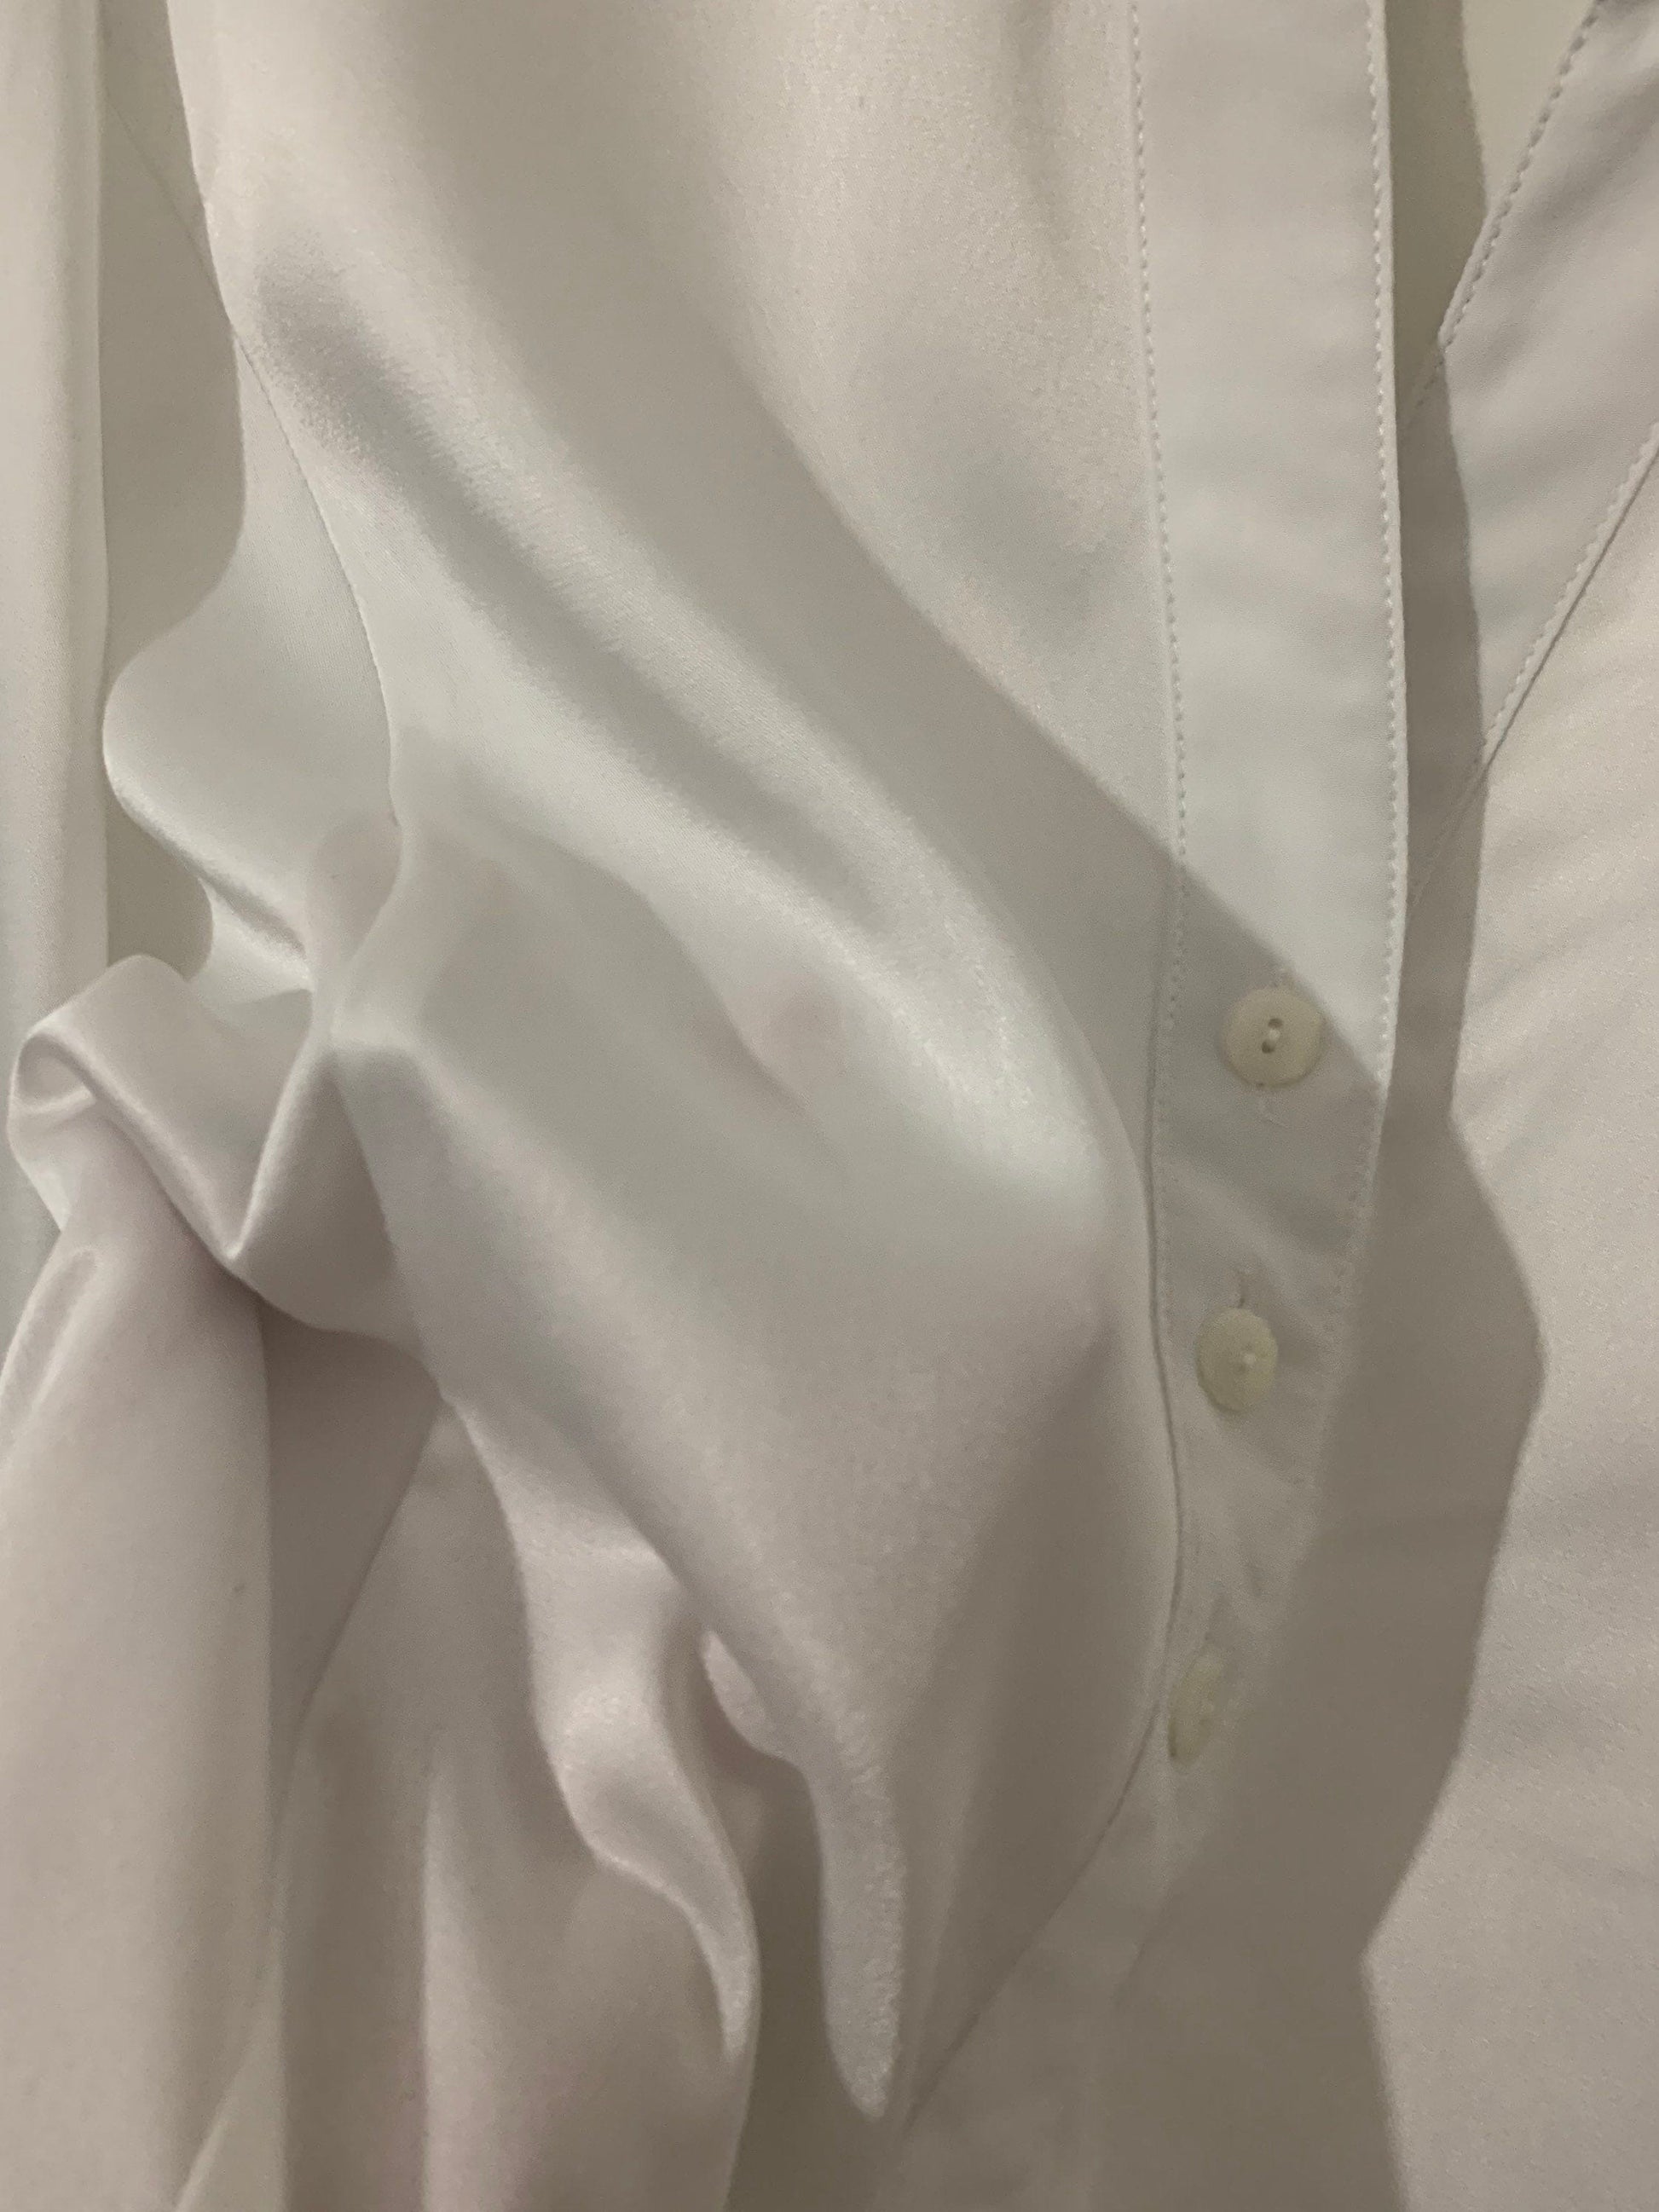 White Vintage Blouse Shiny Button Through Boxy long Sleeves Shirt - Size 14